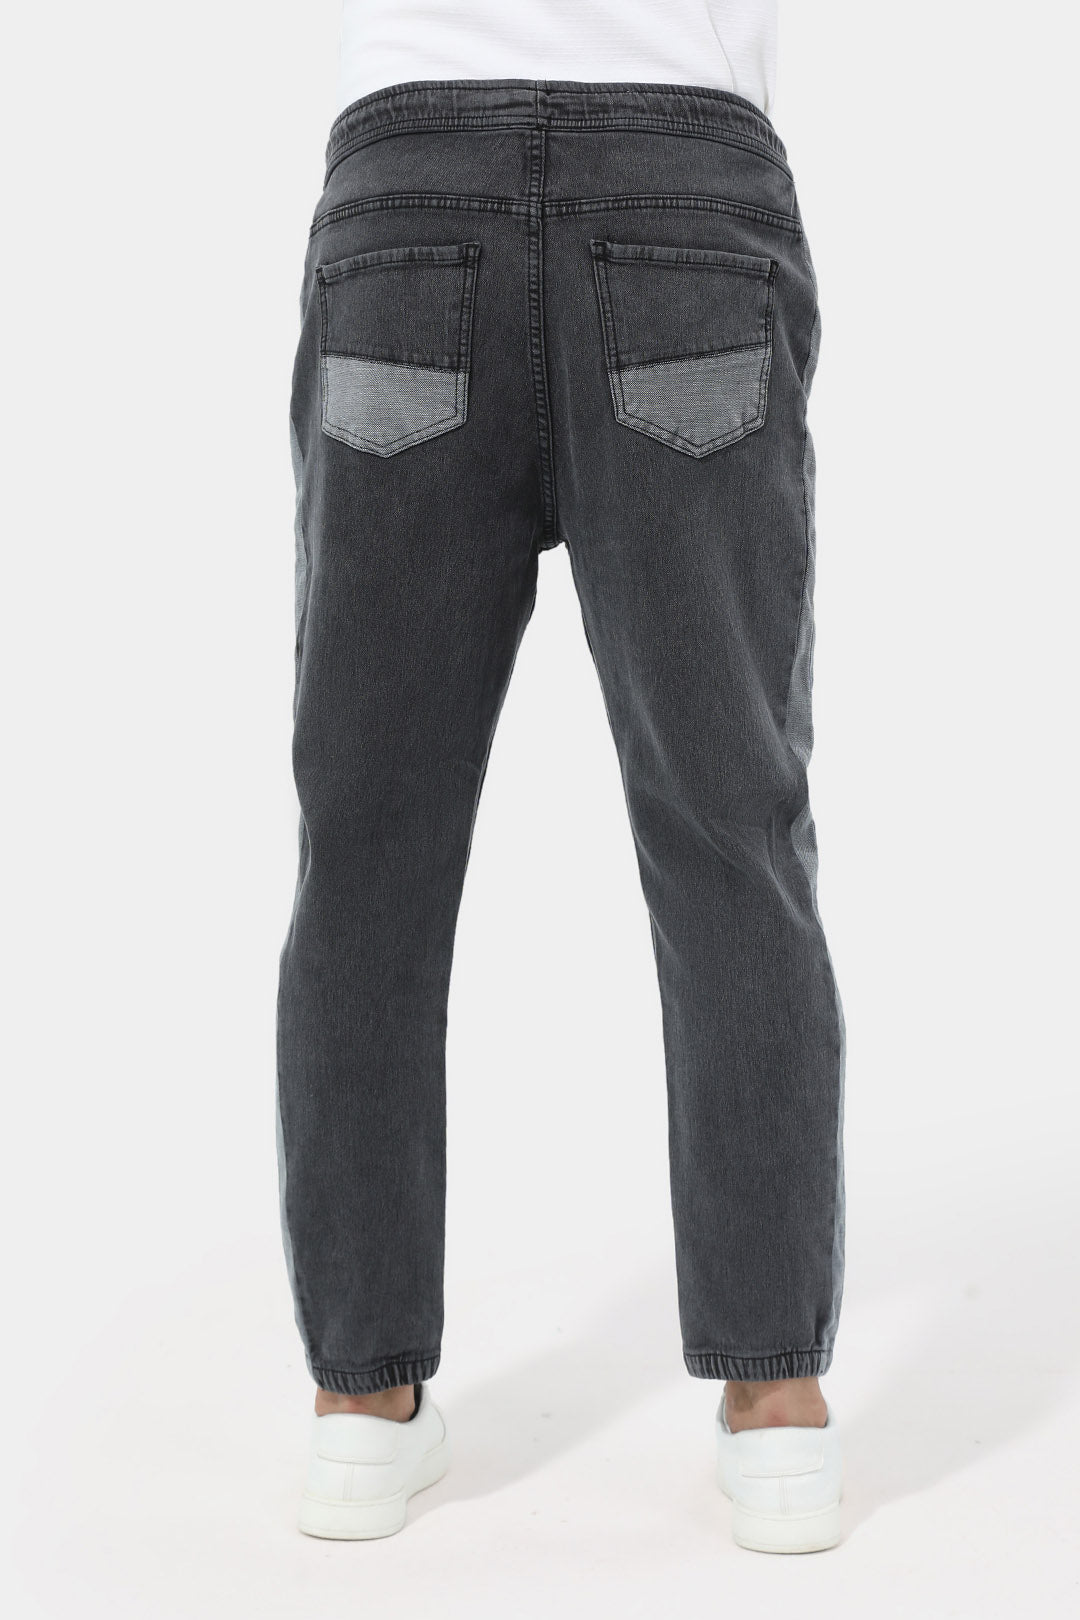 grey slim fit jean pants